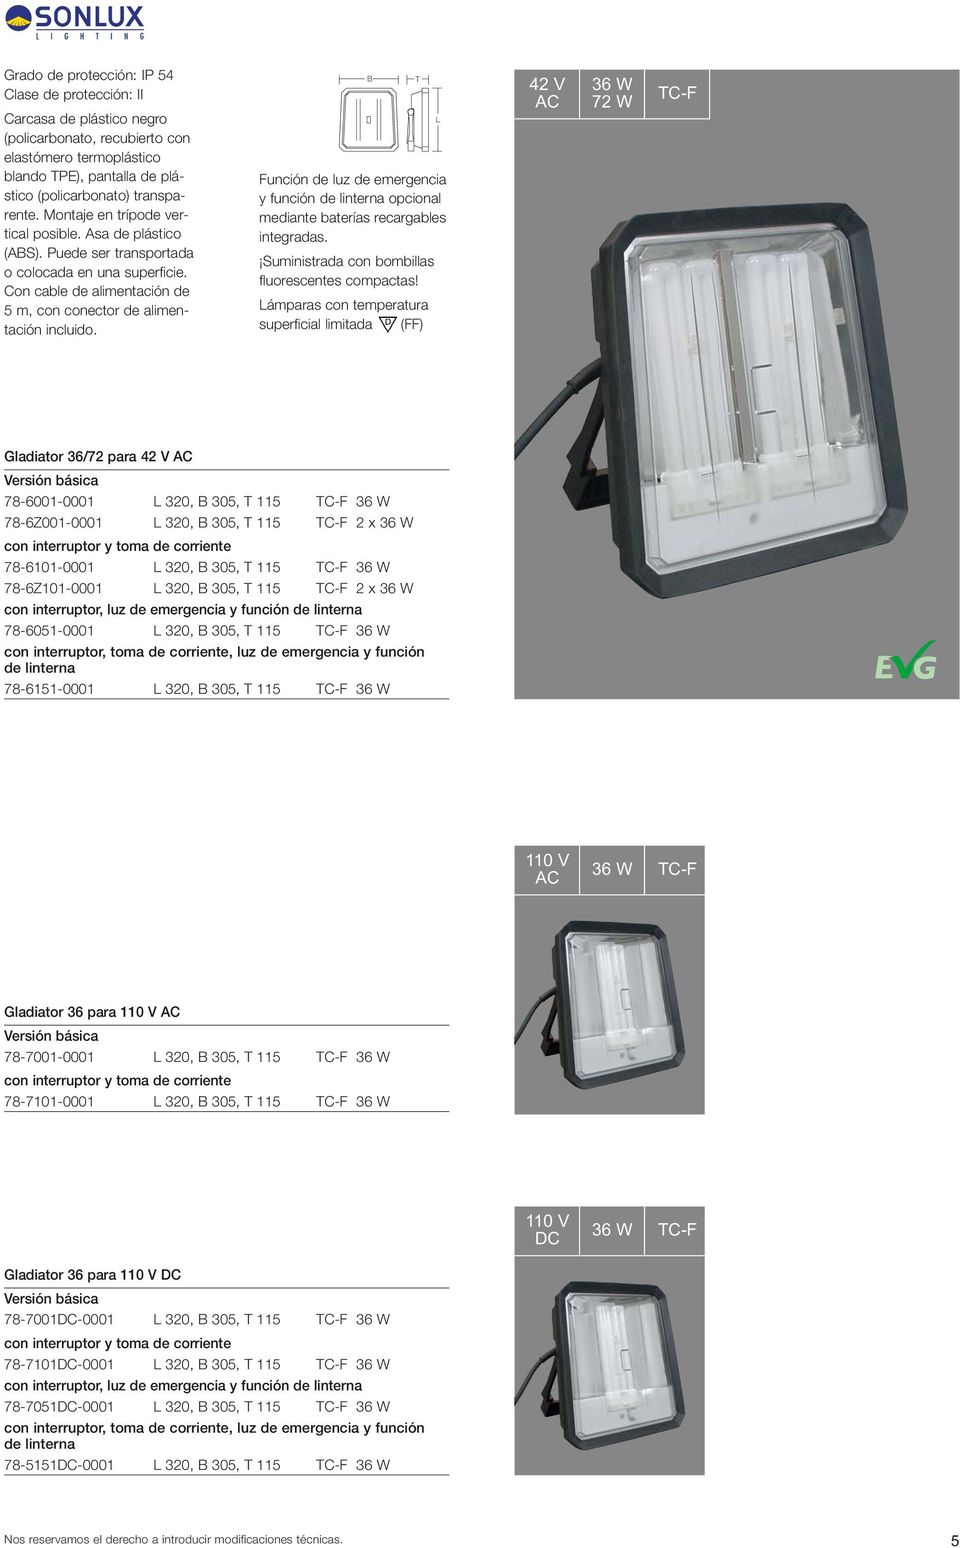 Función de luz de emergencia y función de linterna opcional mediante baterías recargables integradas. Suministrada con bombillas fluorescentes compactas!